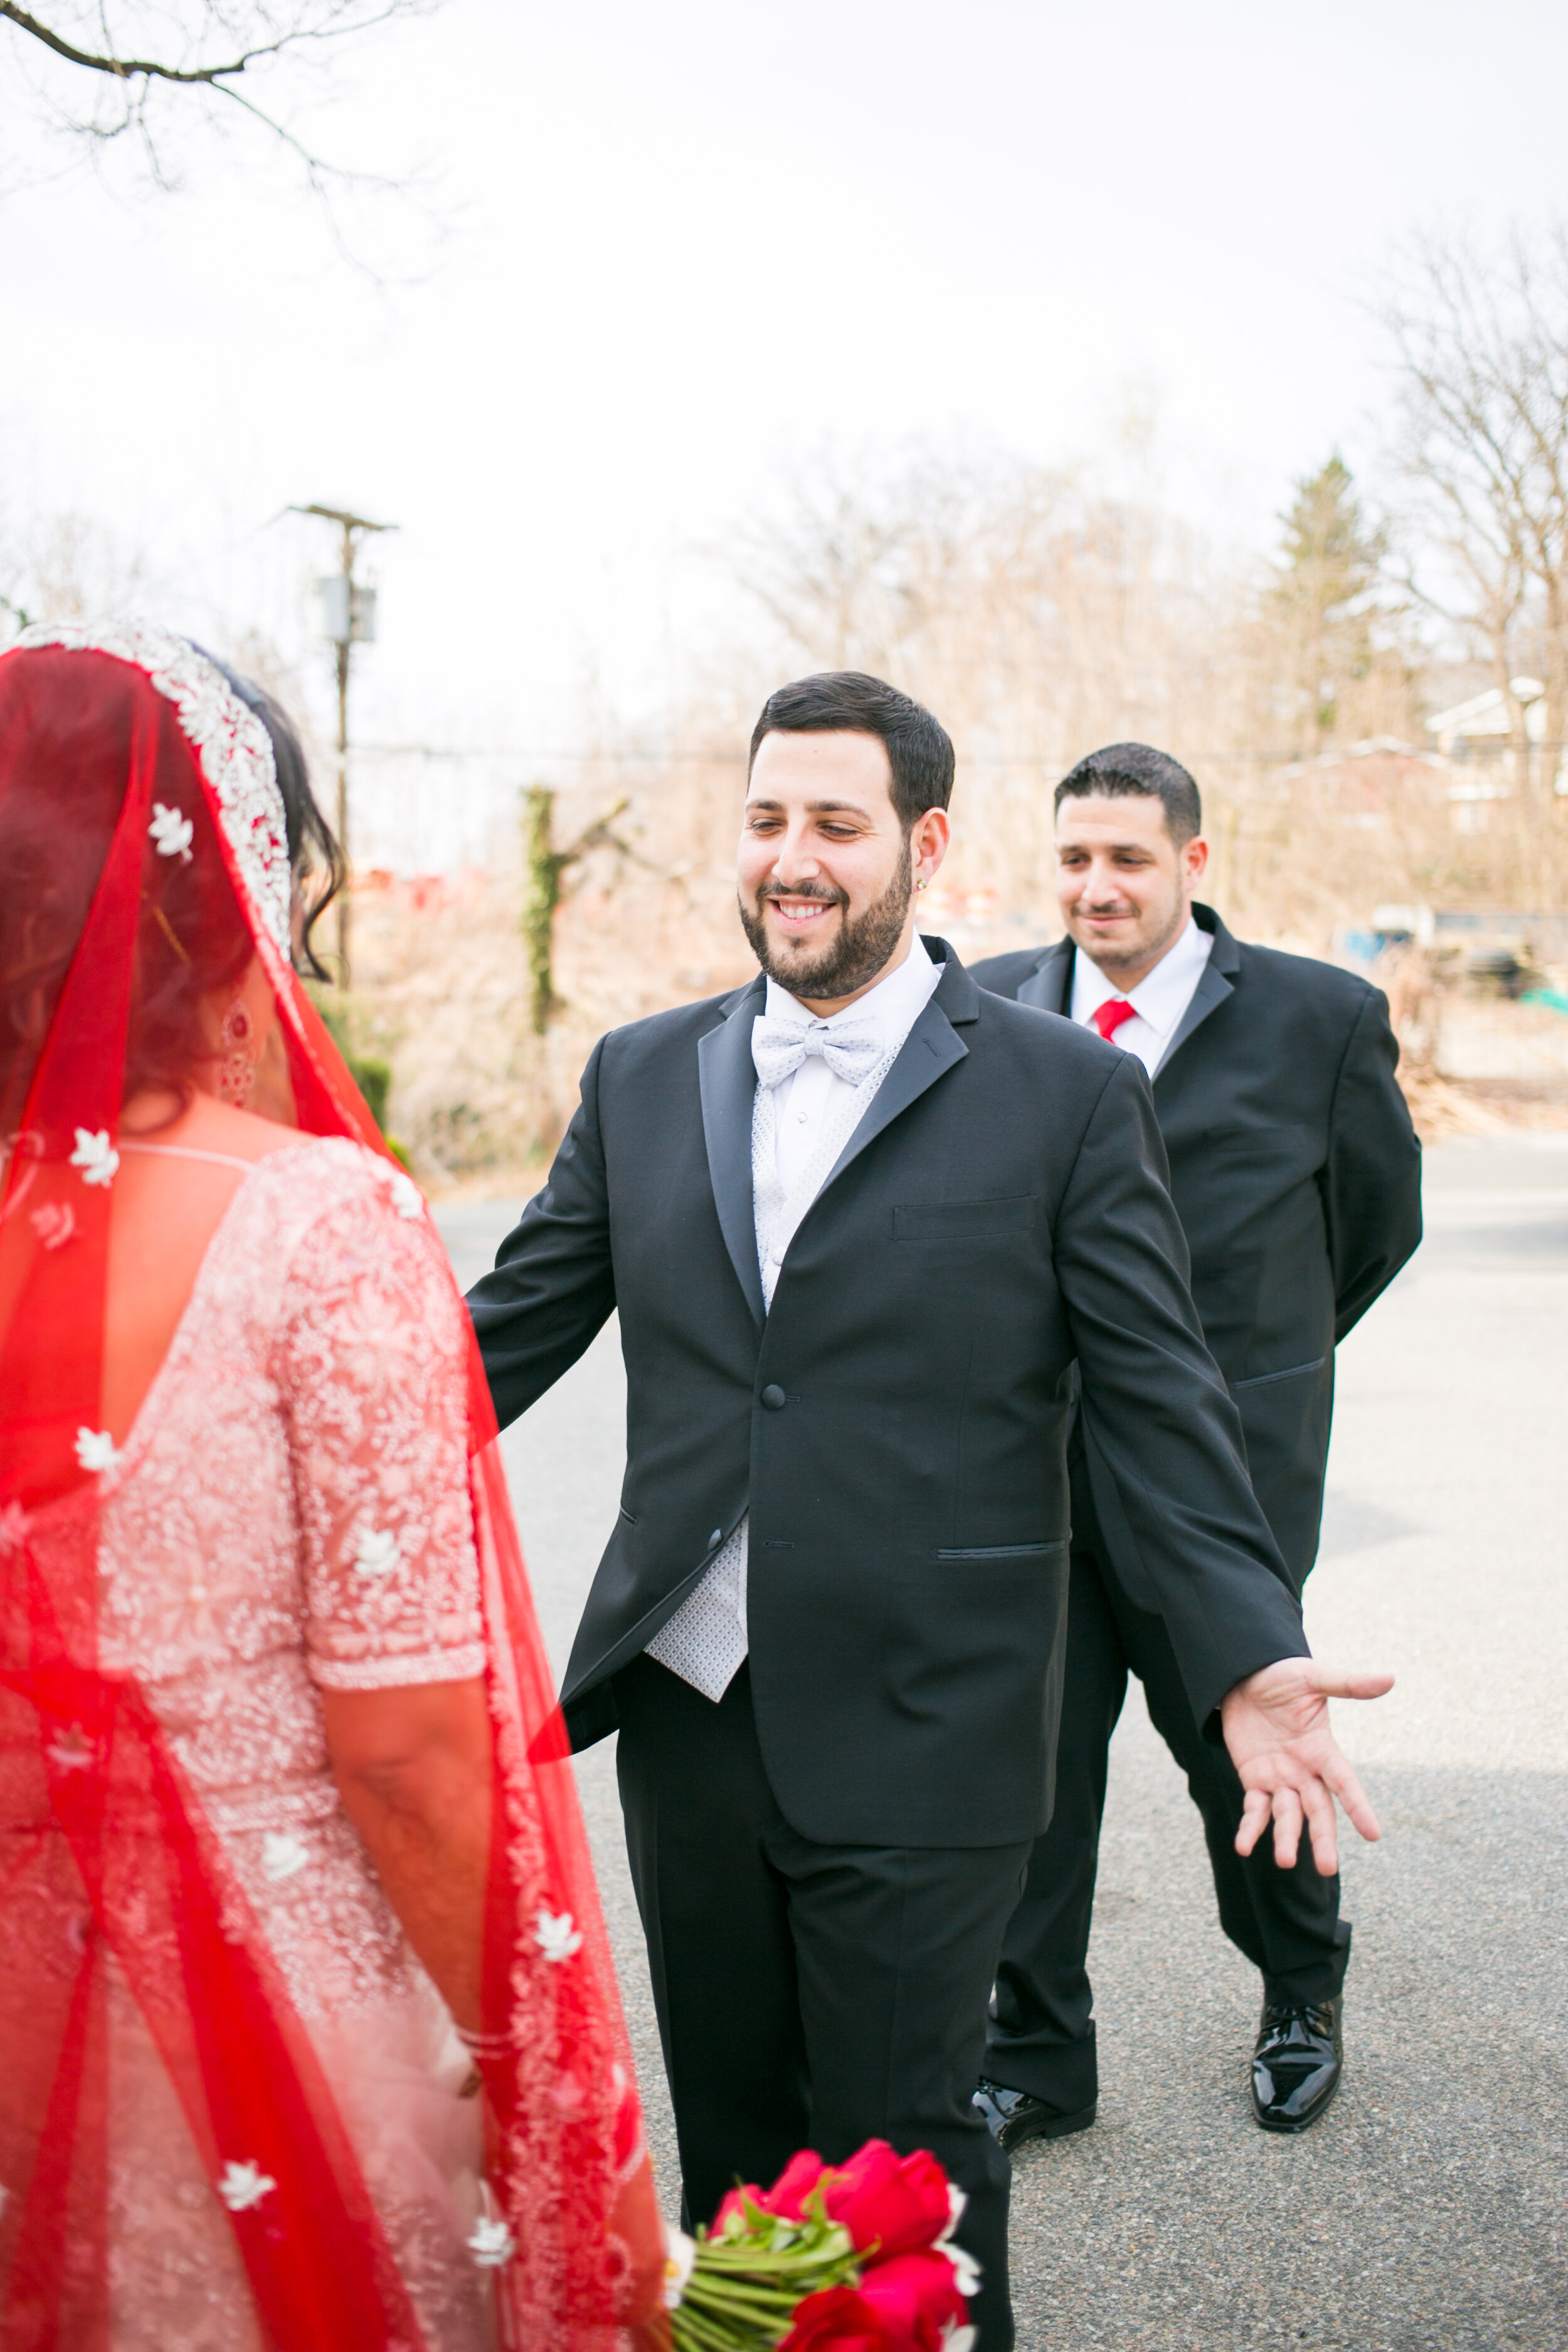 Sikh-jewish-multicultural-wedding-long-island-ny